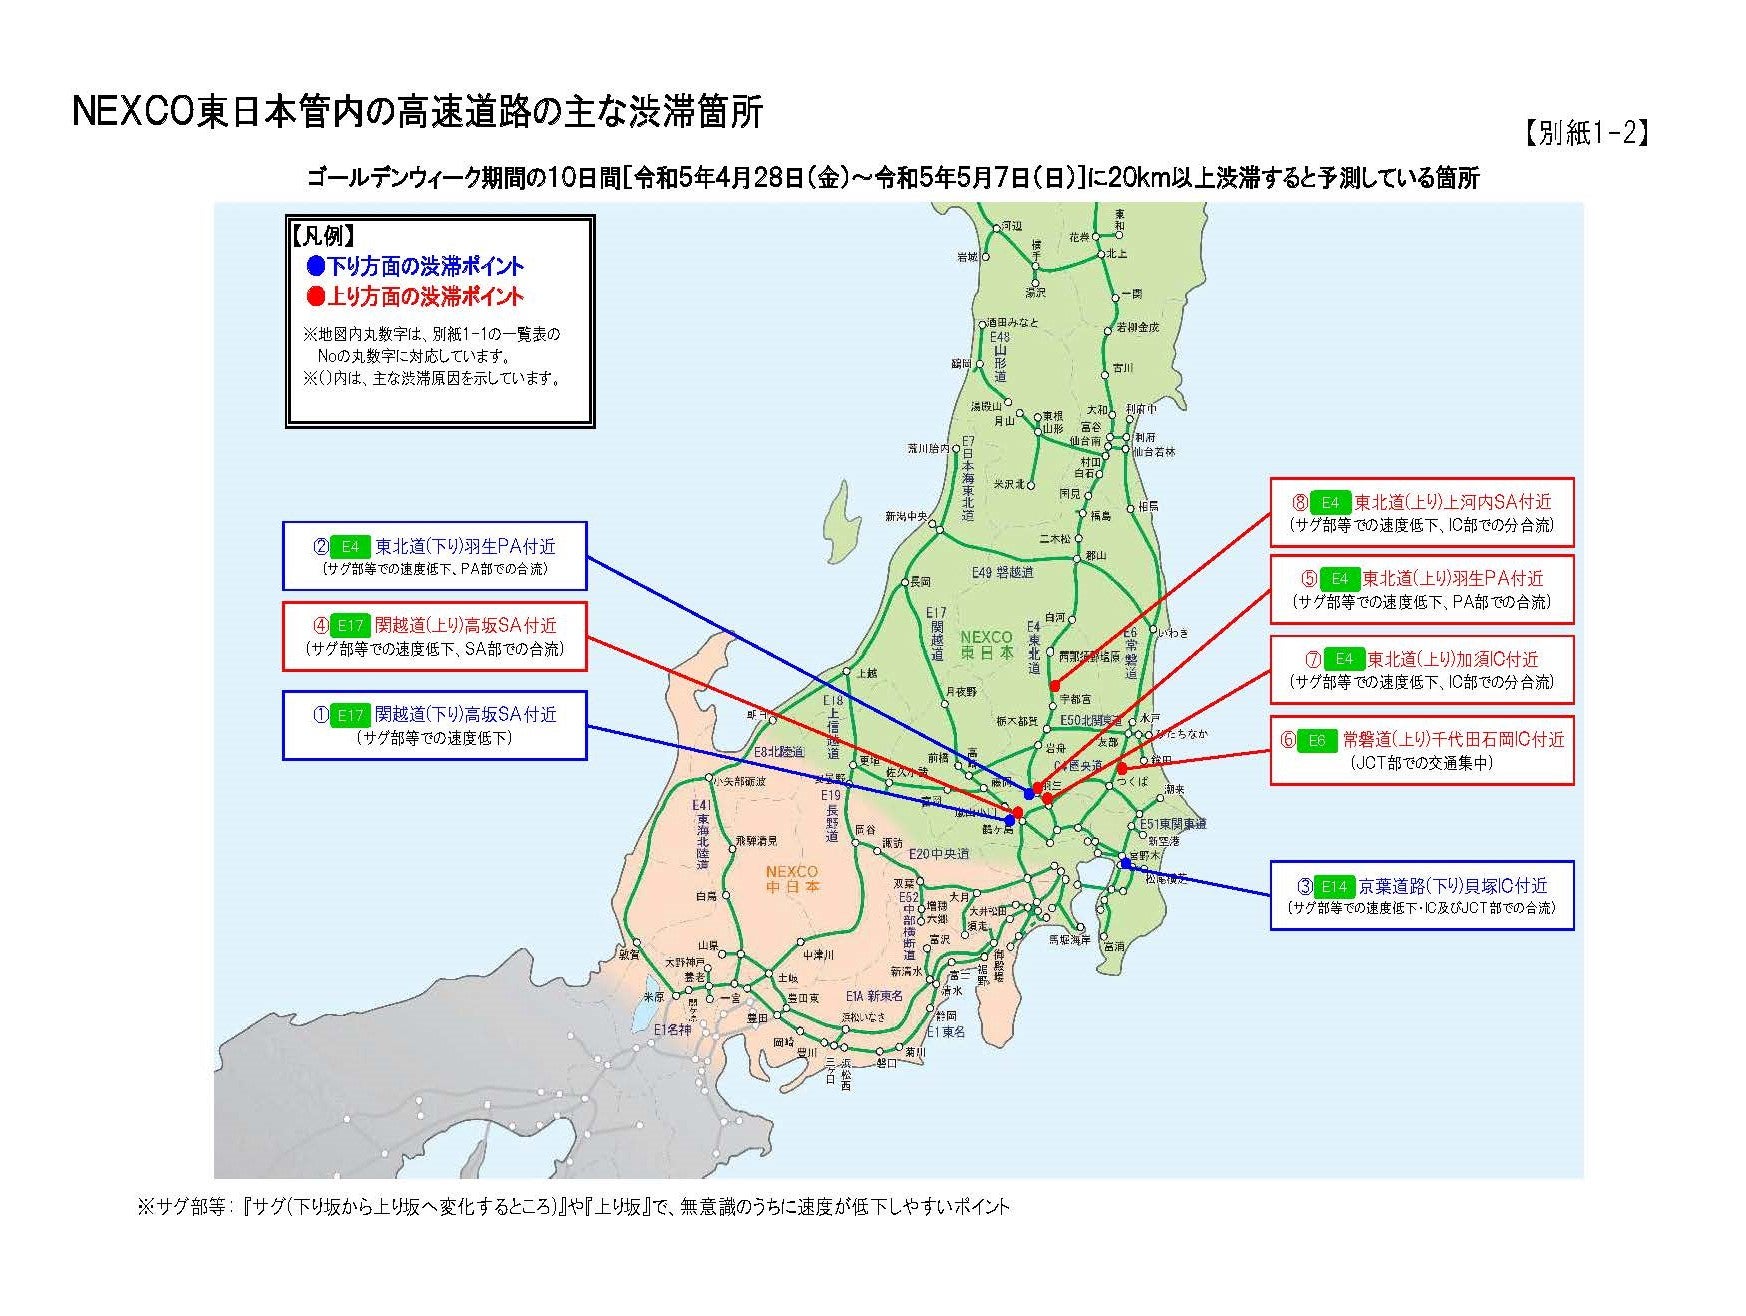 NEXCO東日本管内のGW期間中における主な渋滞箇所